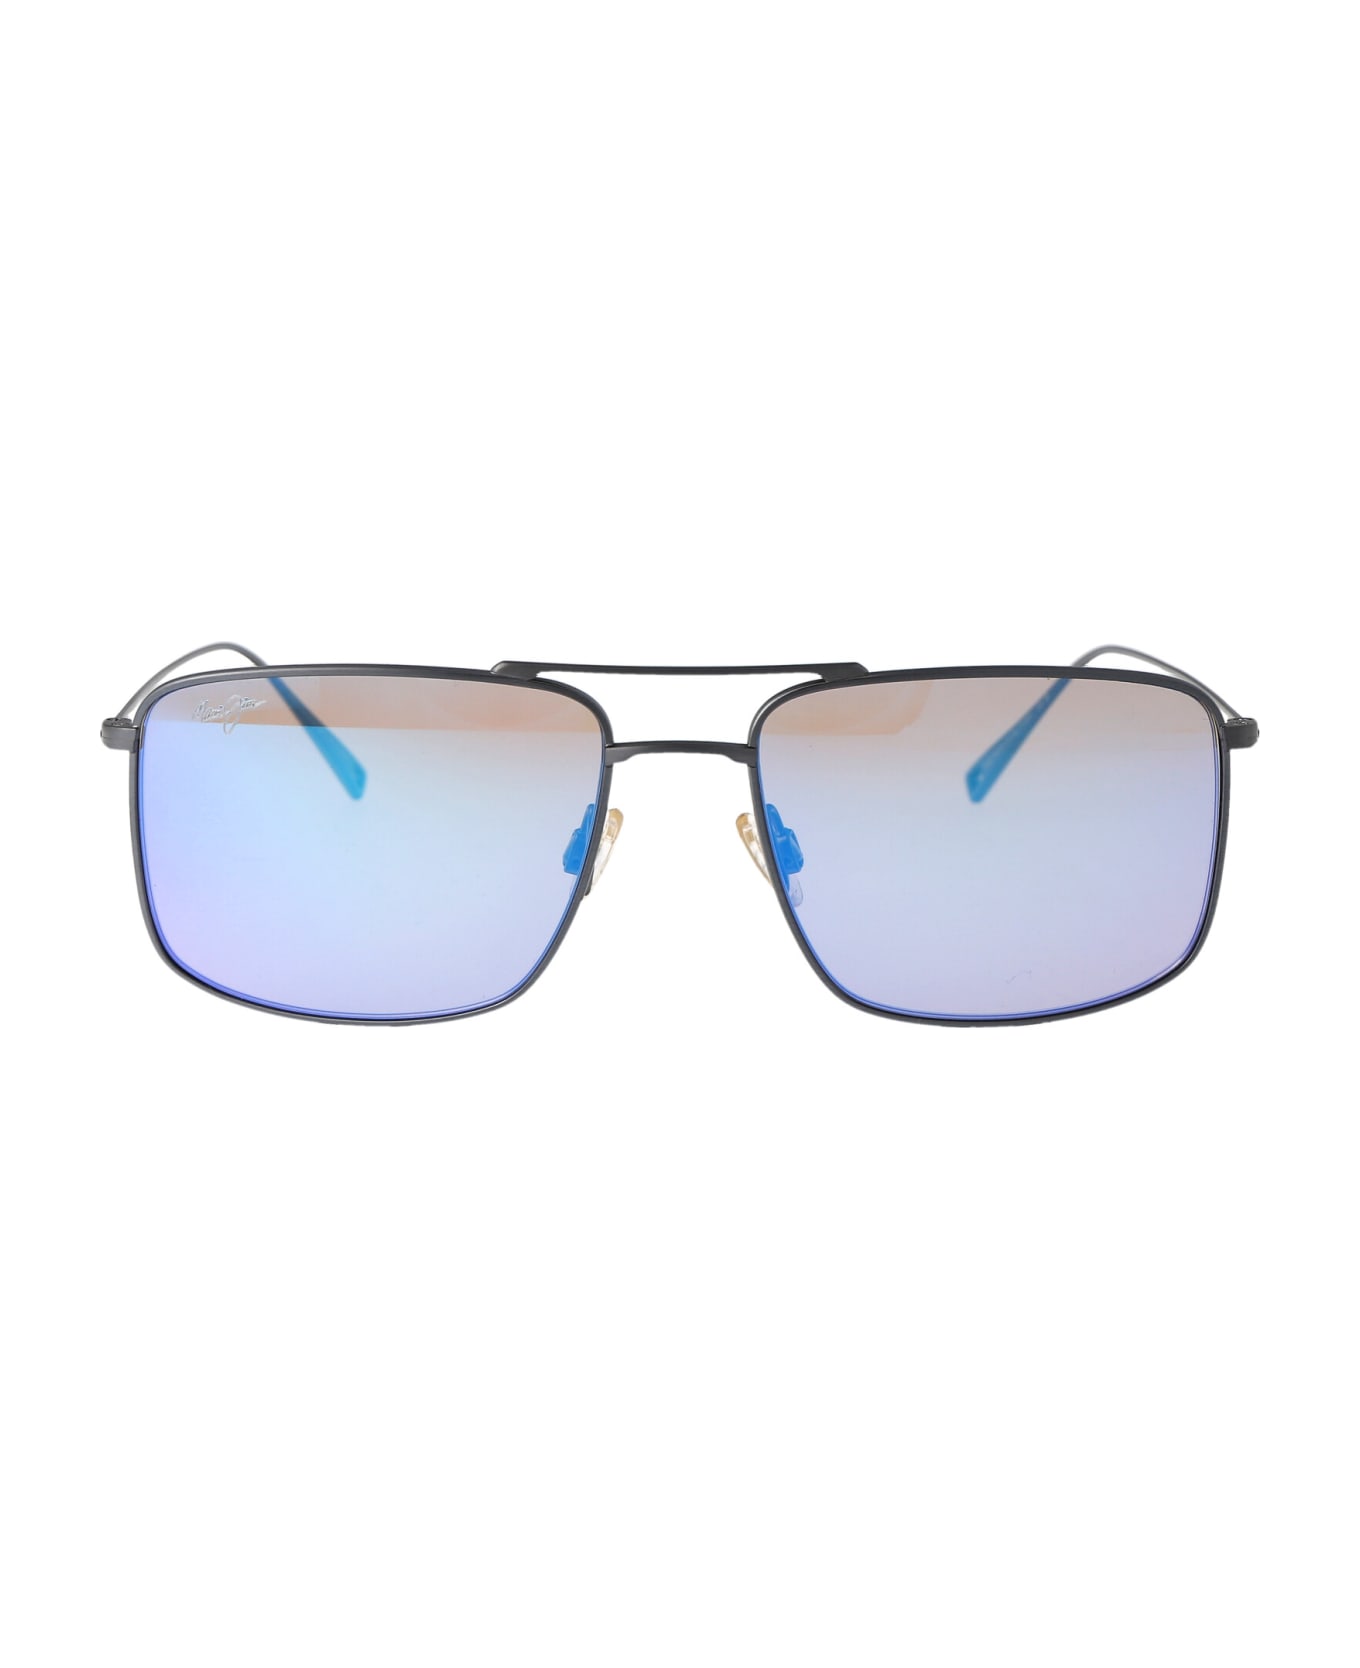 Maui Jim Aeko Sunglasses - 03 BLUE HAWAII DOVE GREY